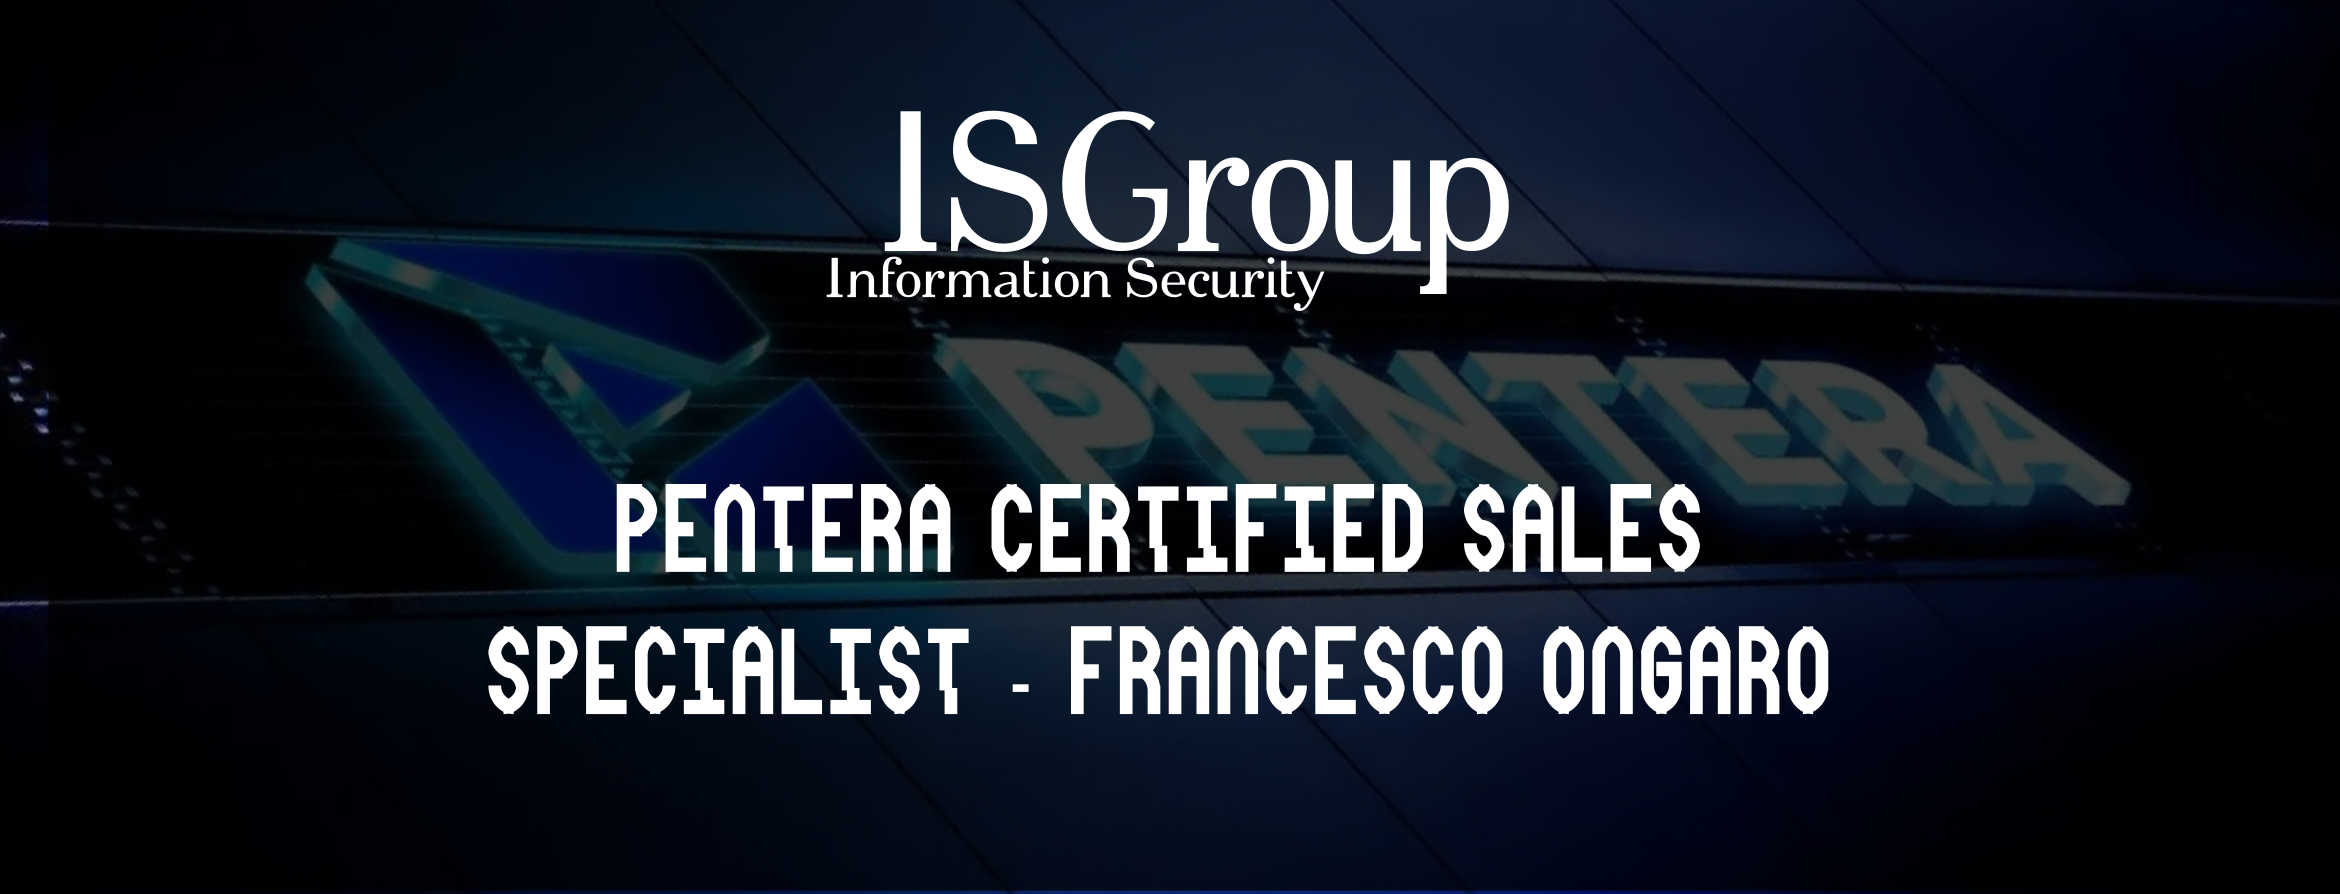 PenTera Certified Sales Specialist - Francesco Ongaro